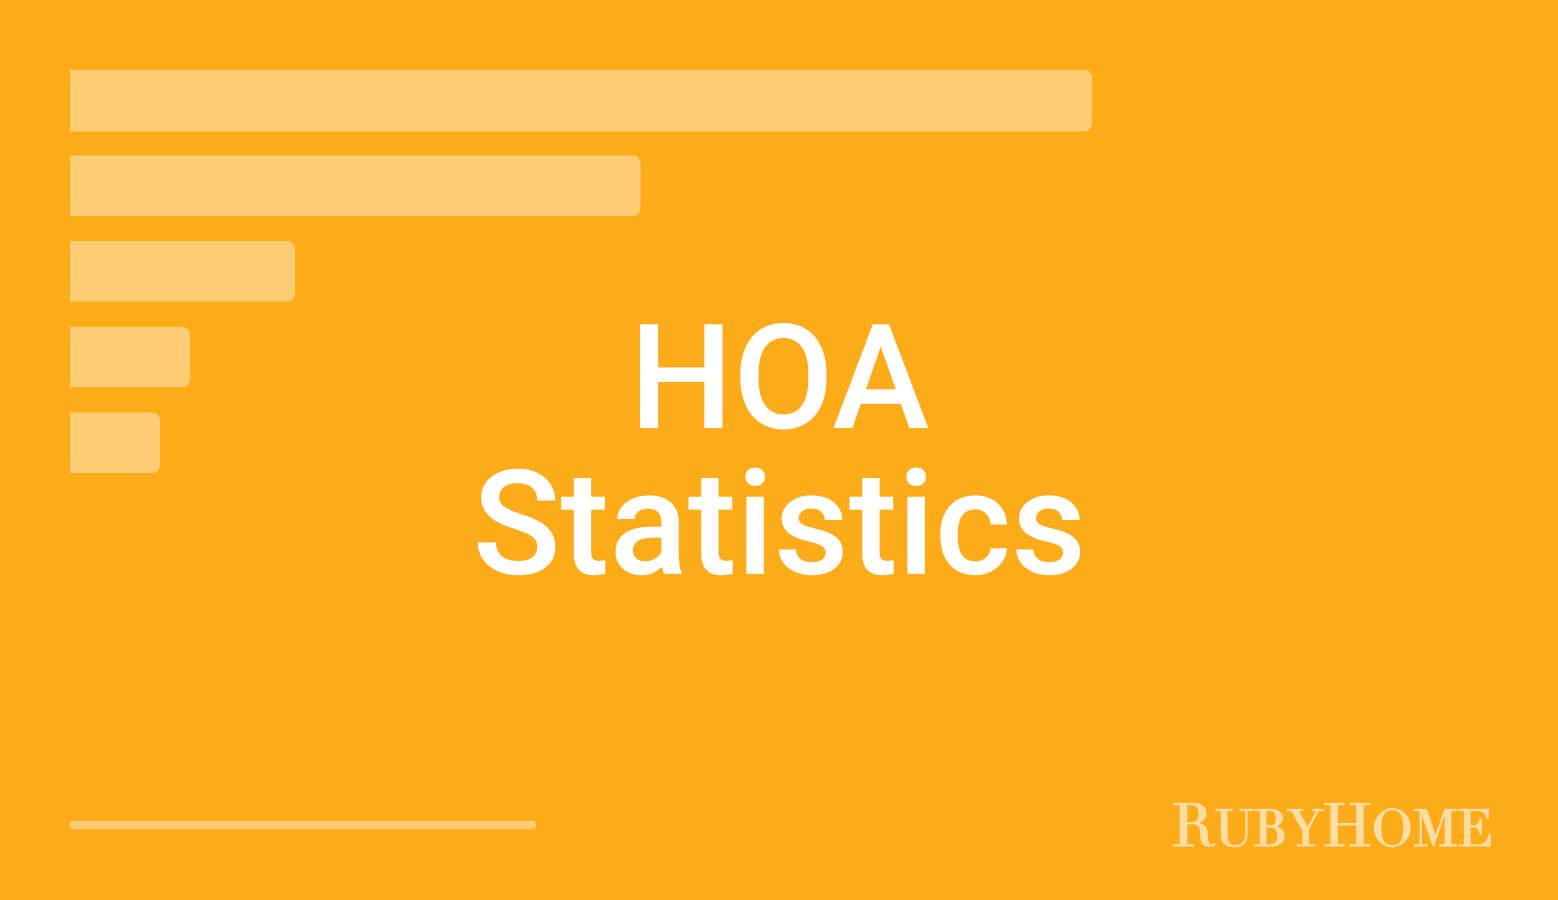 HOA Statistics